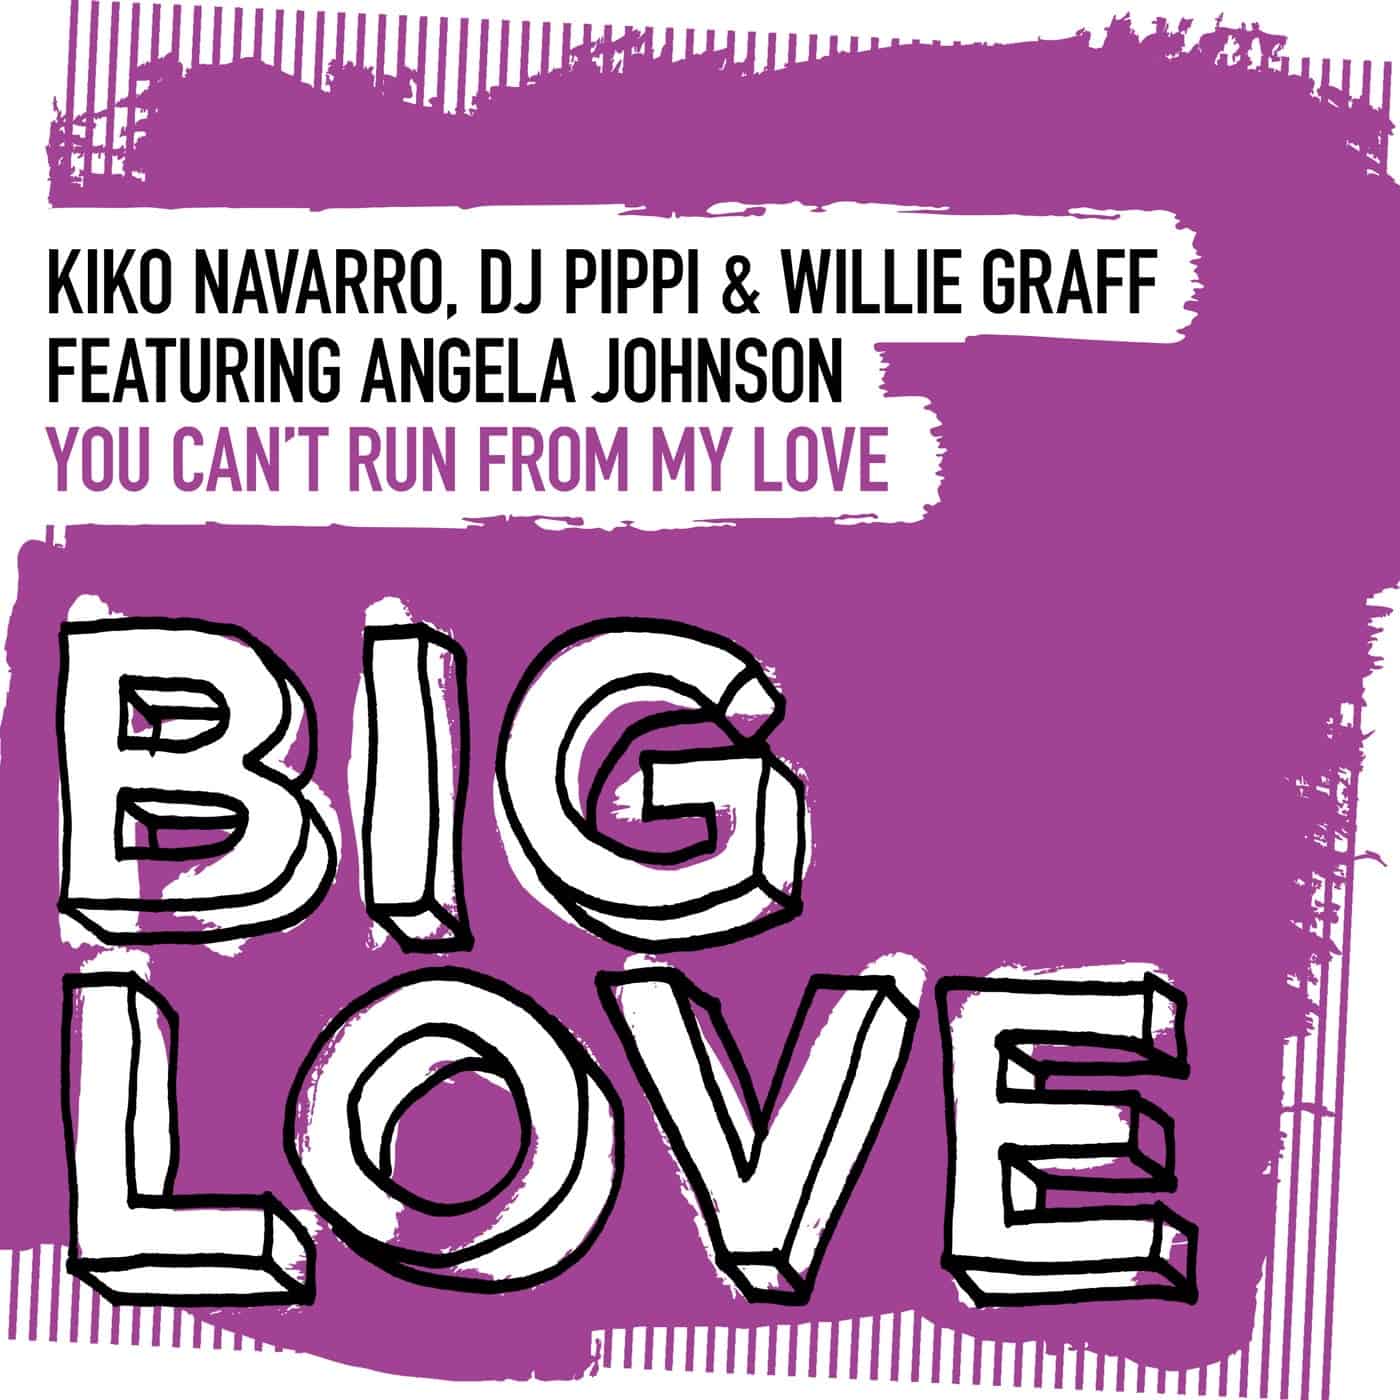 Download Kiko Navarro, DJ Pippi, Angela Johnson, Willie Graff - You Can't Run From My Love on Electrobuzz